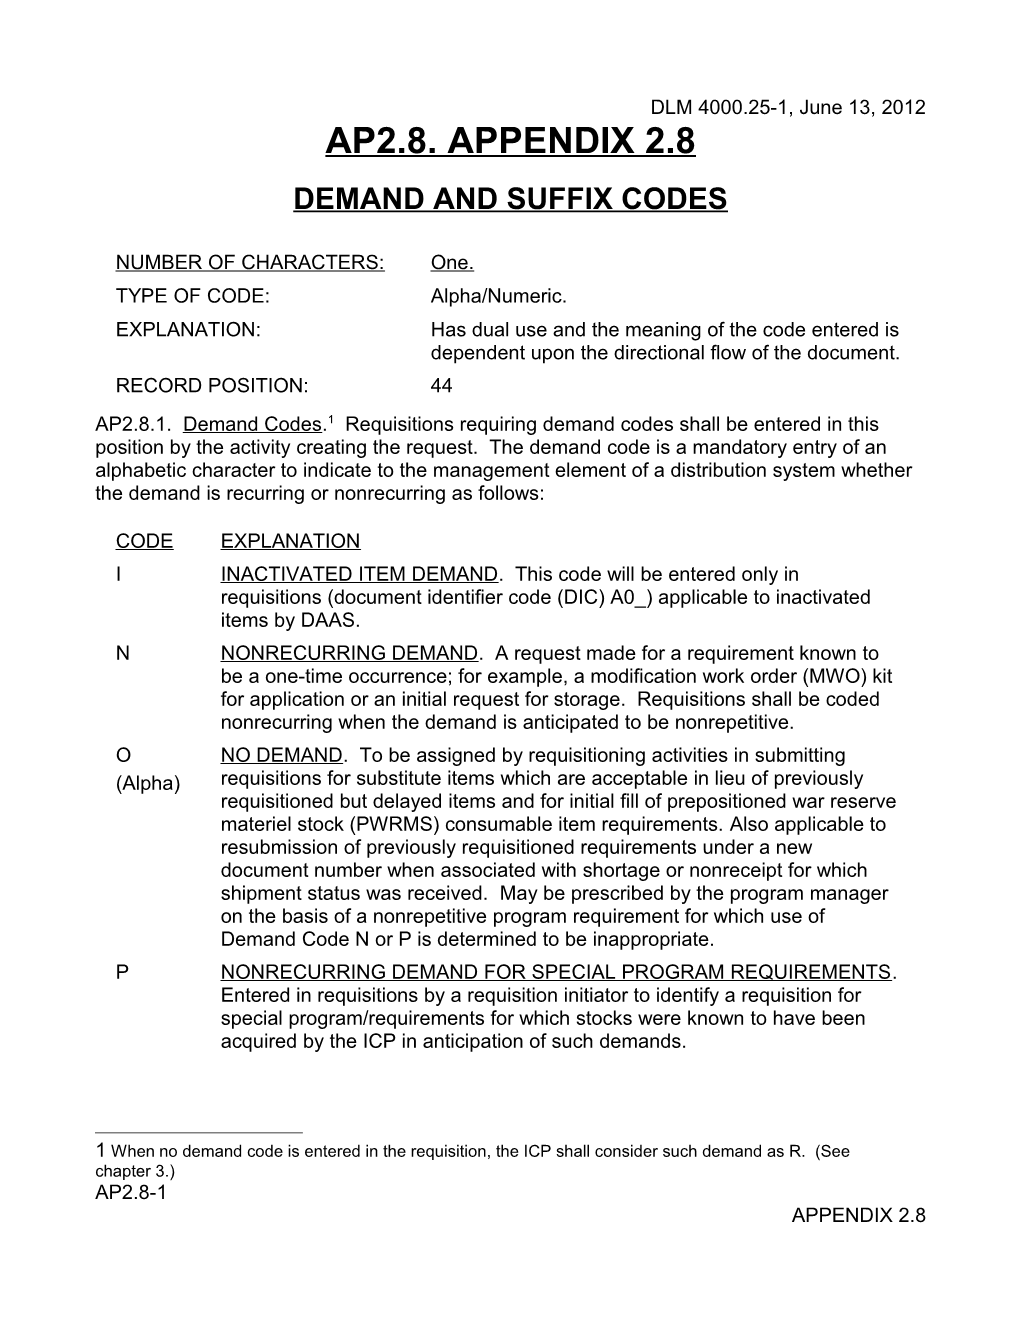 Appendix 2.8 - Demand and Suffix Codes